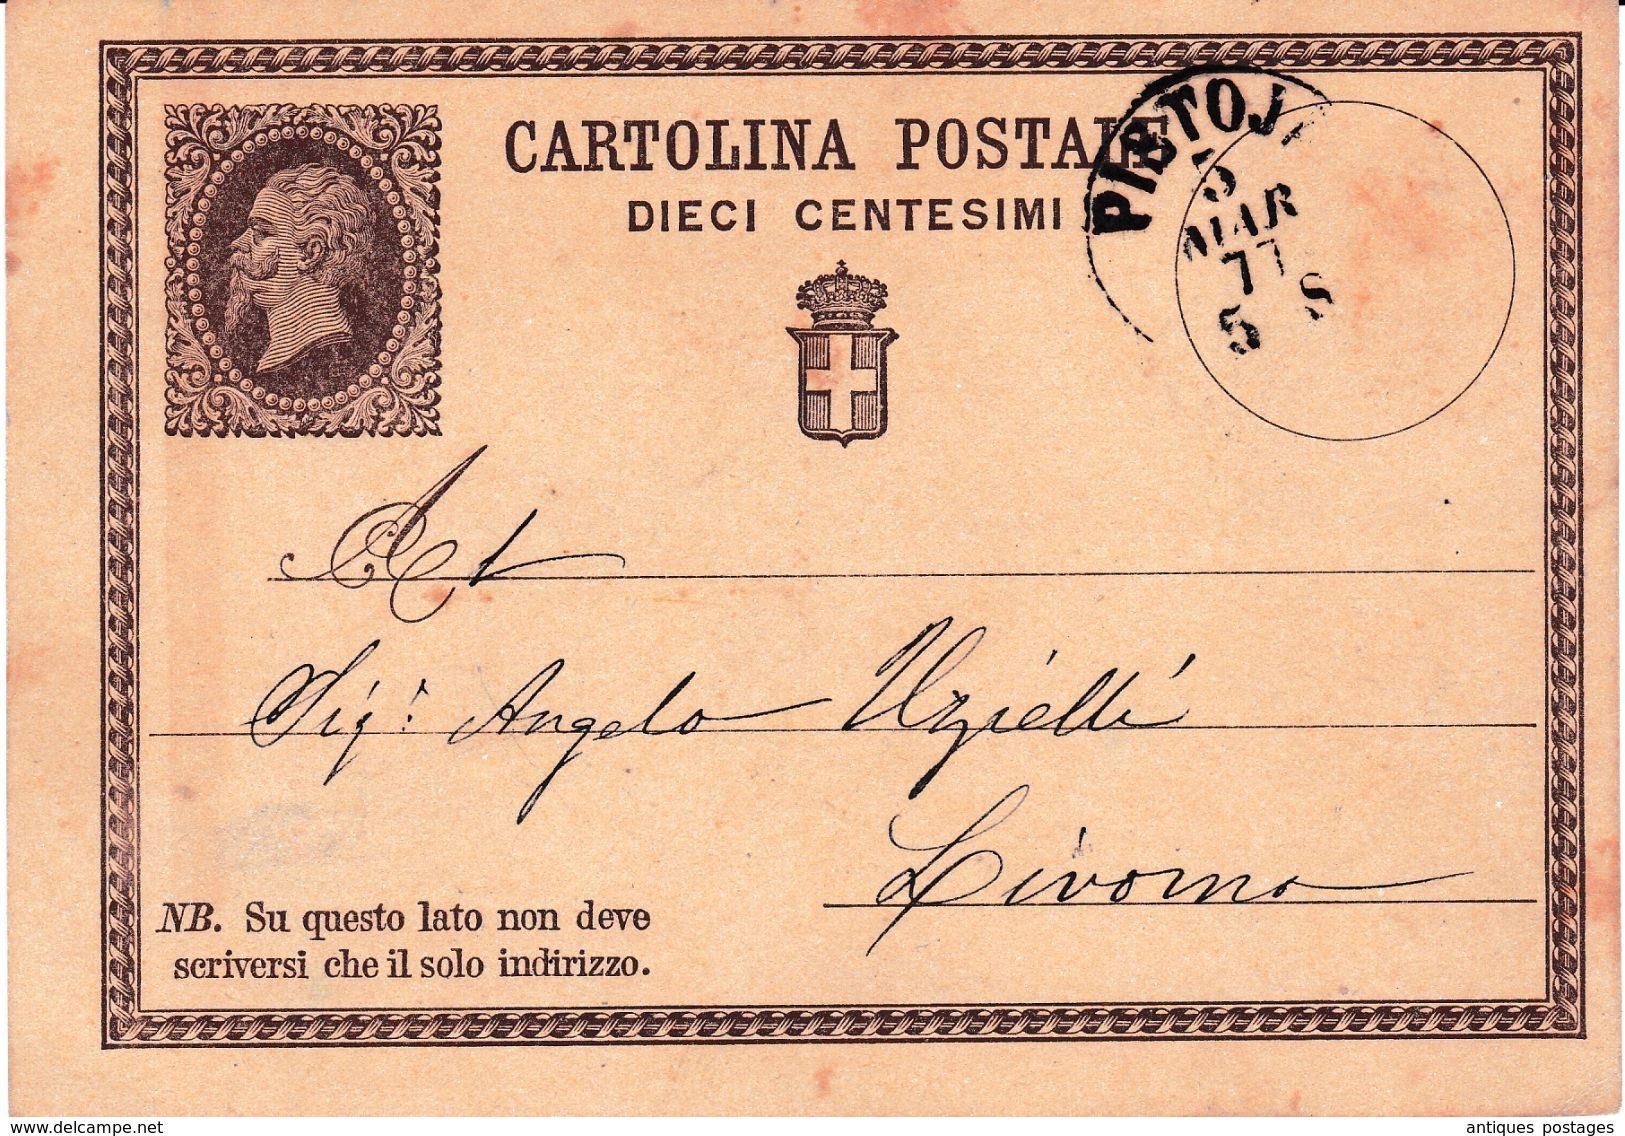 Carte Postale Pistoia Italie 1877 Cartolina Postale  Livorno Livourne - Interi Postali